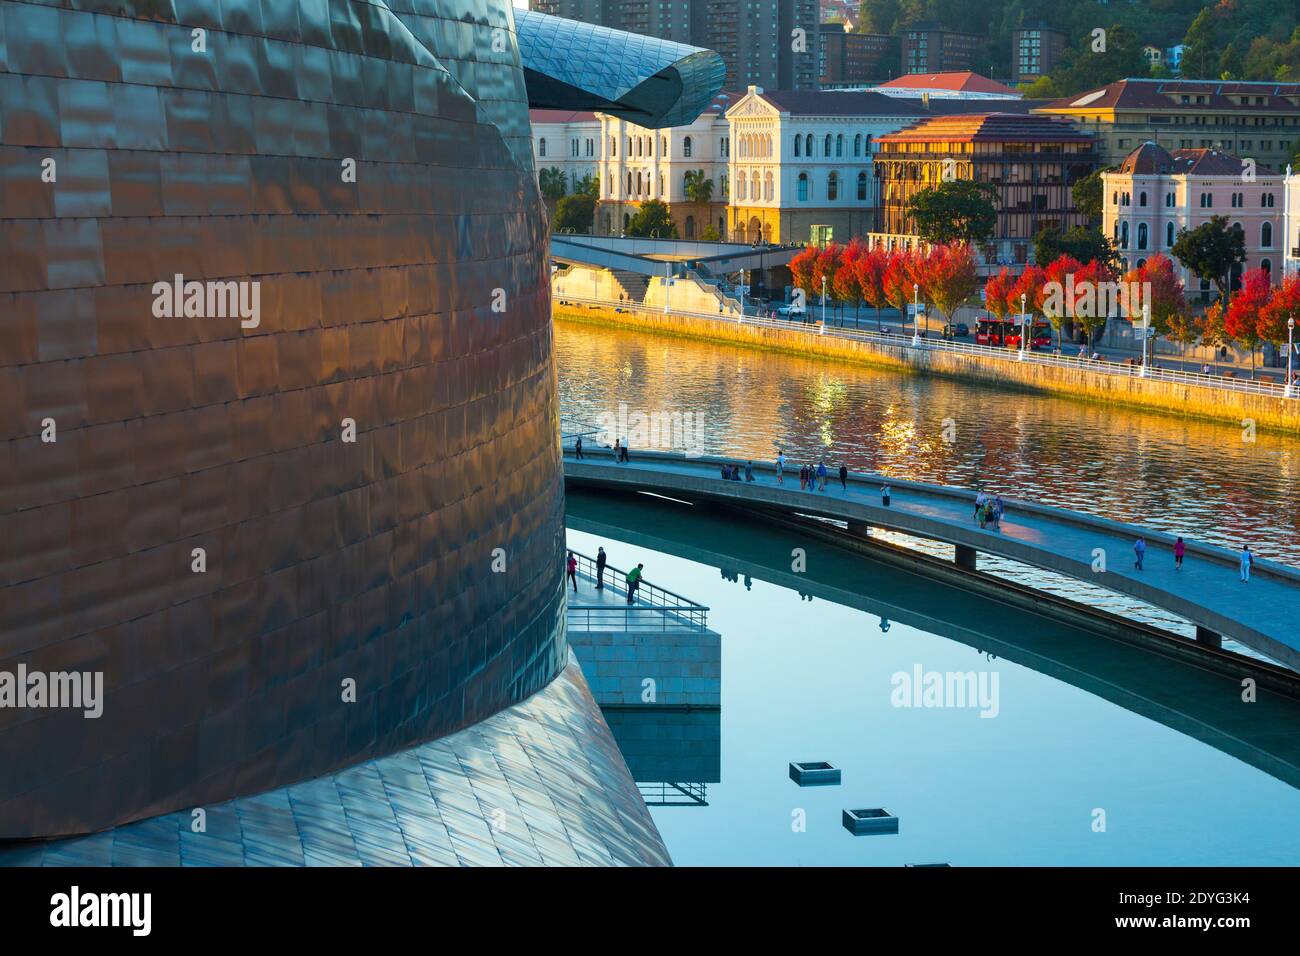 Gugghenheim museum, Bilbao, The Basque Country, Spain, Europe Stock Photo